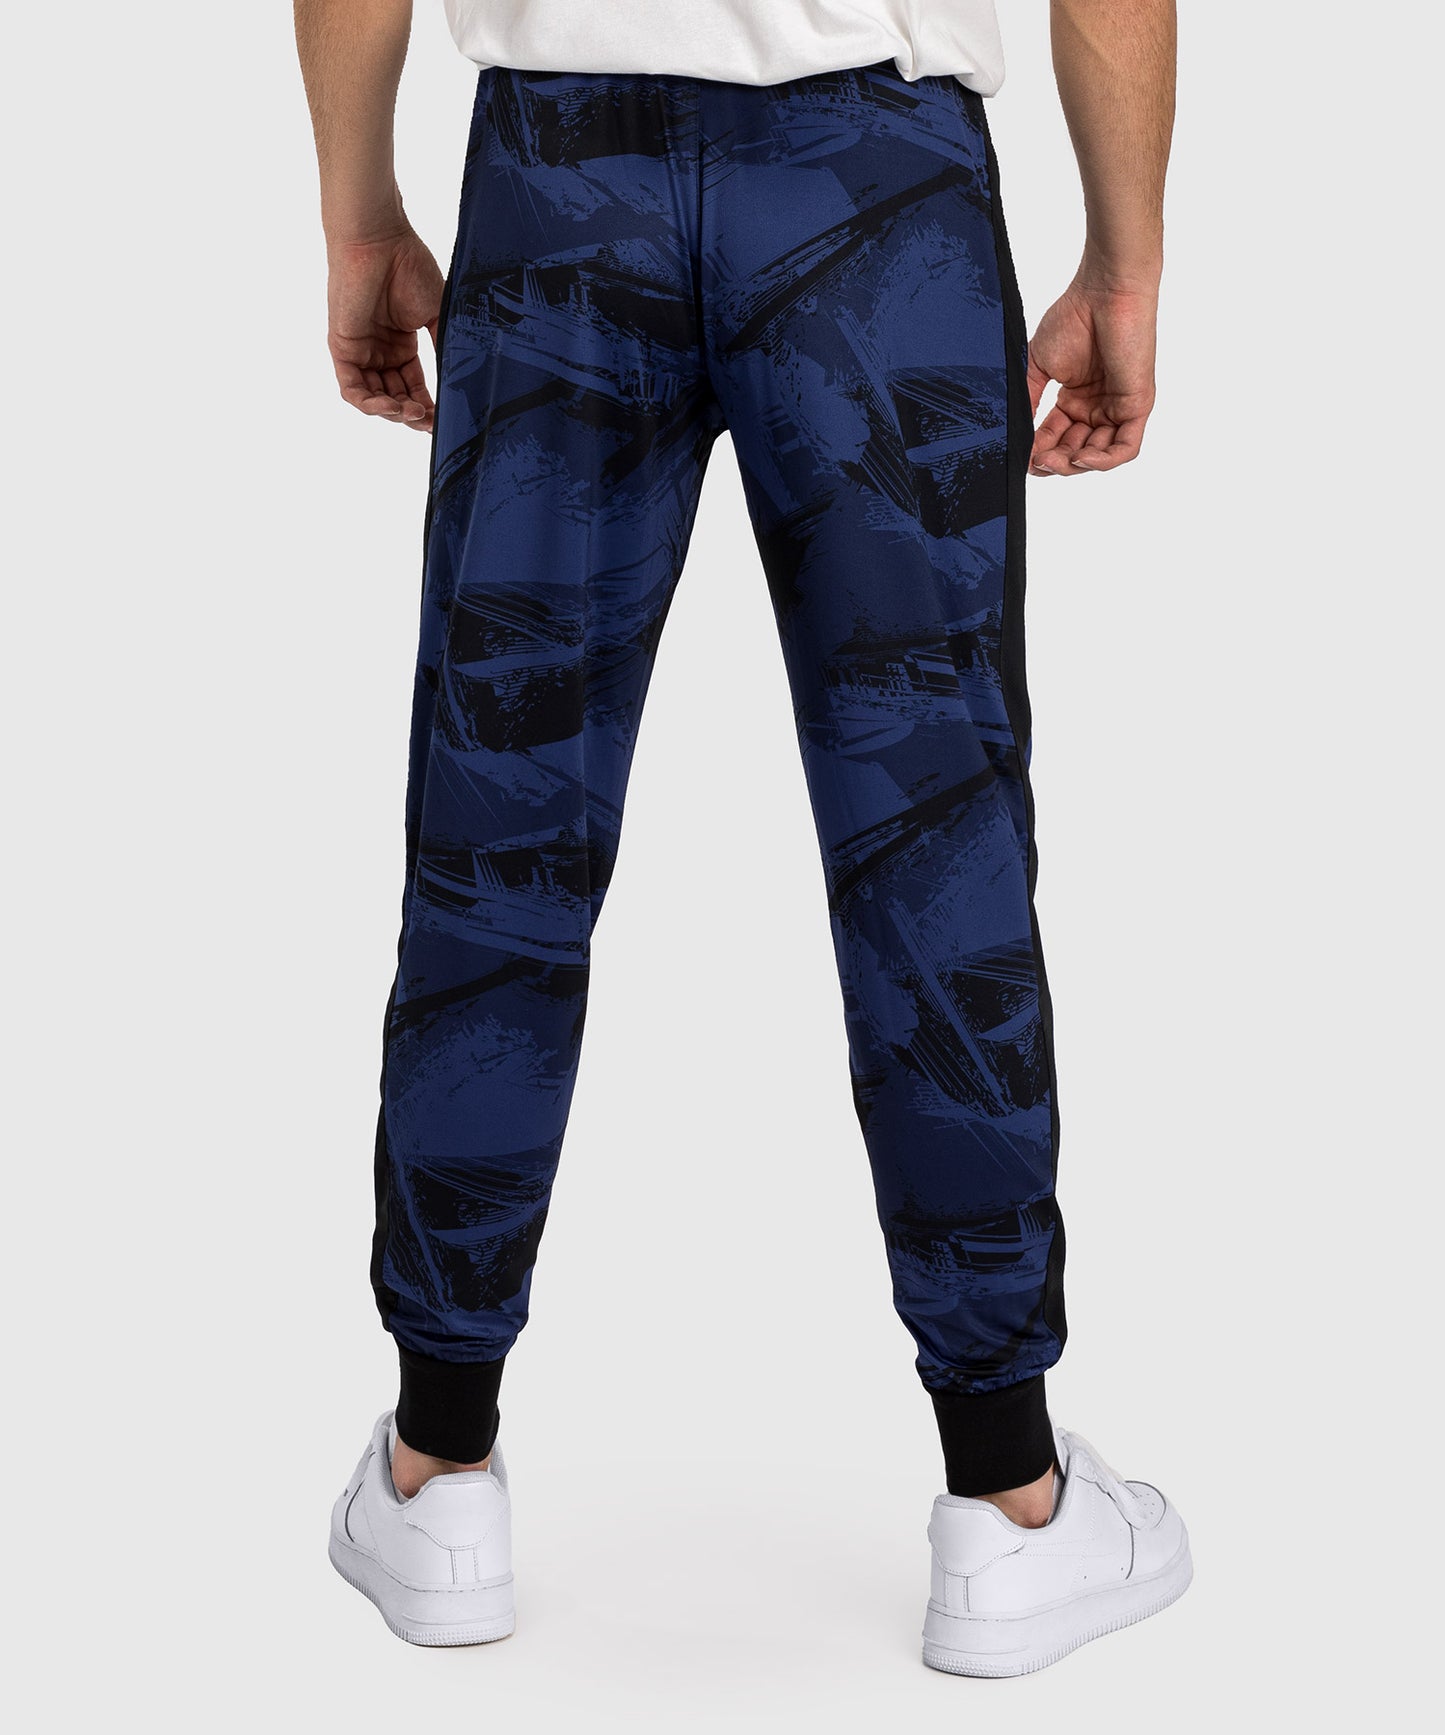 Pantalon de Jogging Venum Electron 3.0 -  Bleu marine